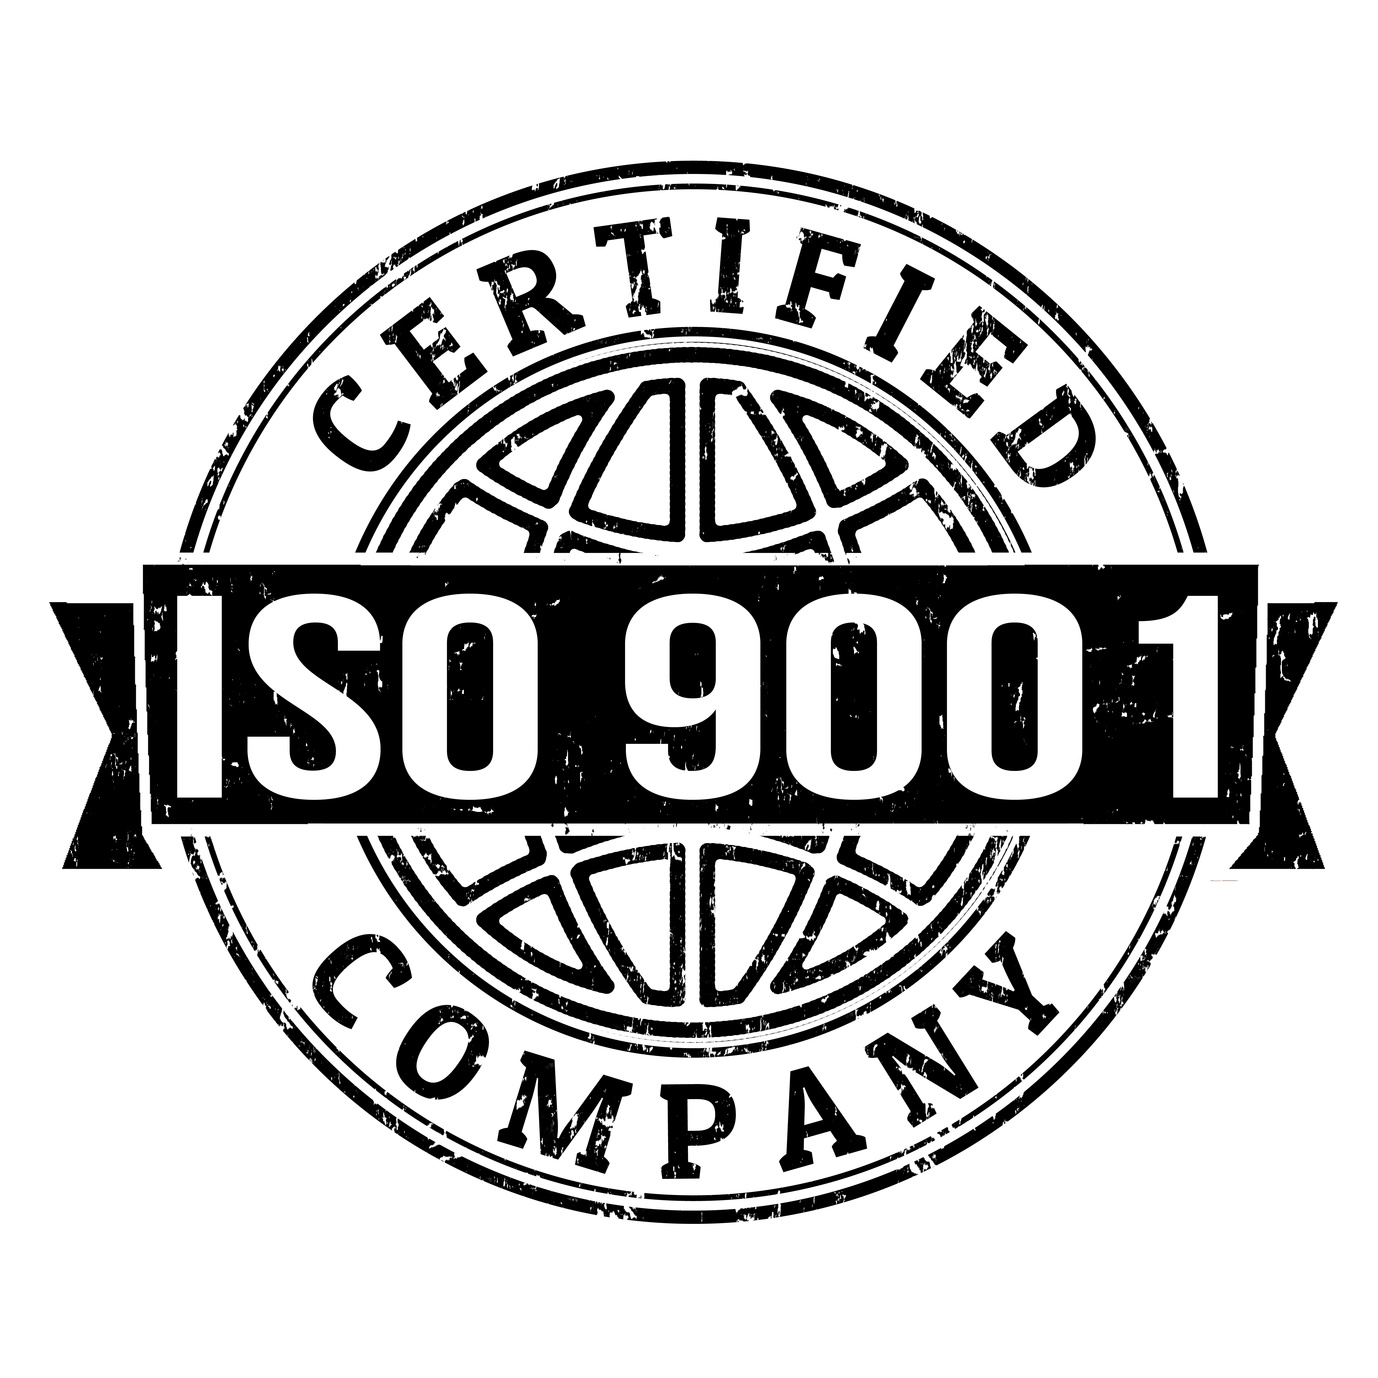 Marlin Steel Has a New ISO 9001:2015 Certificate